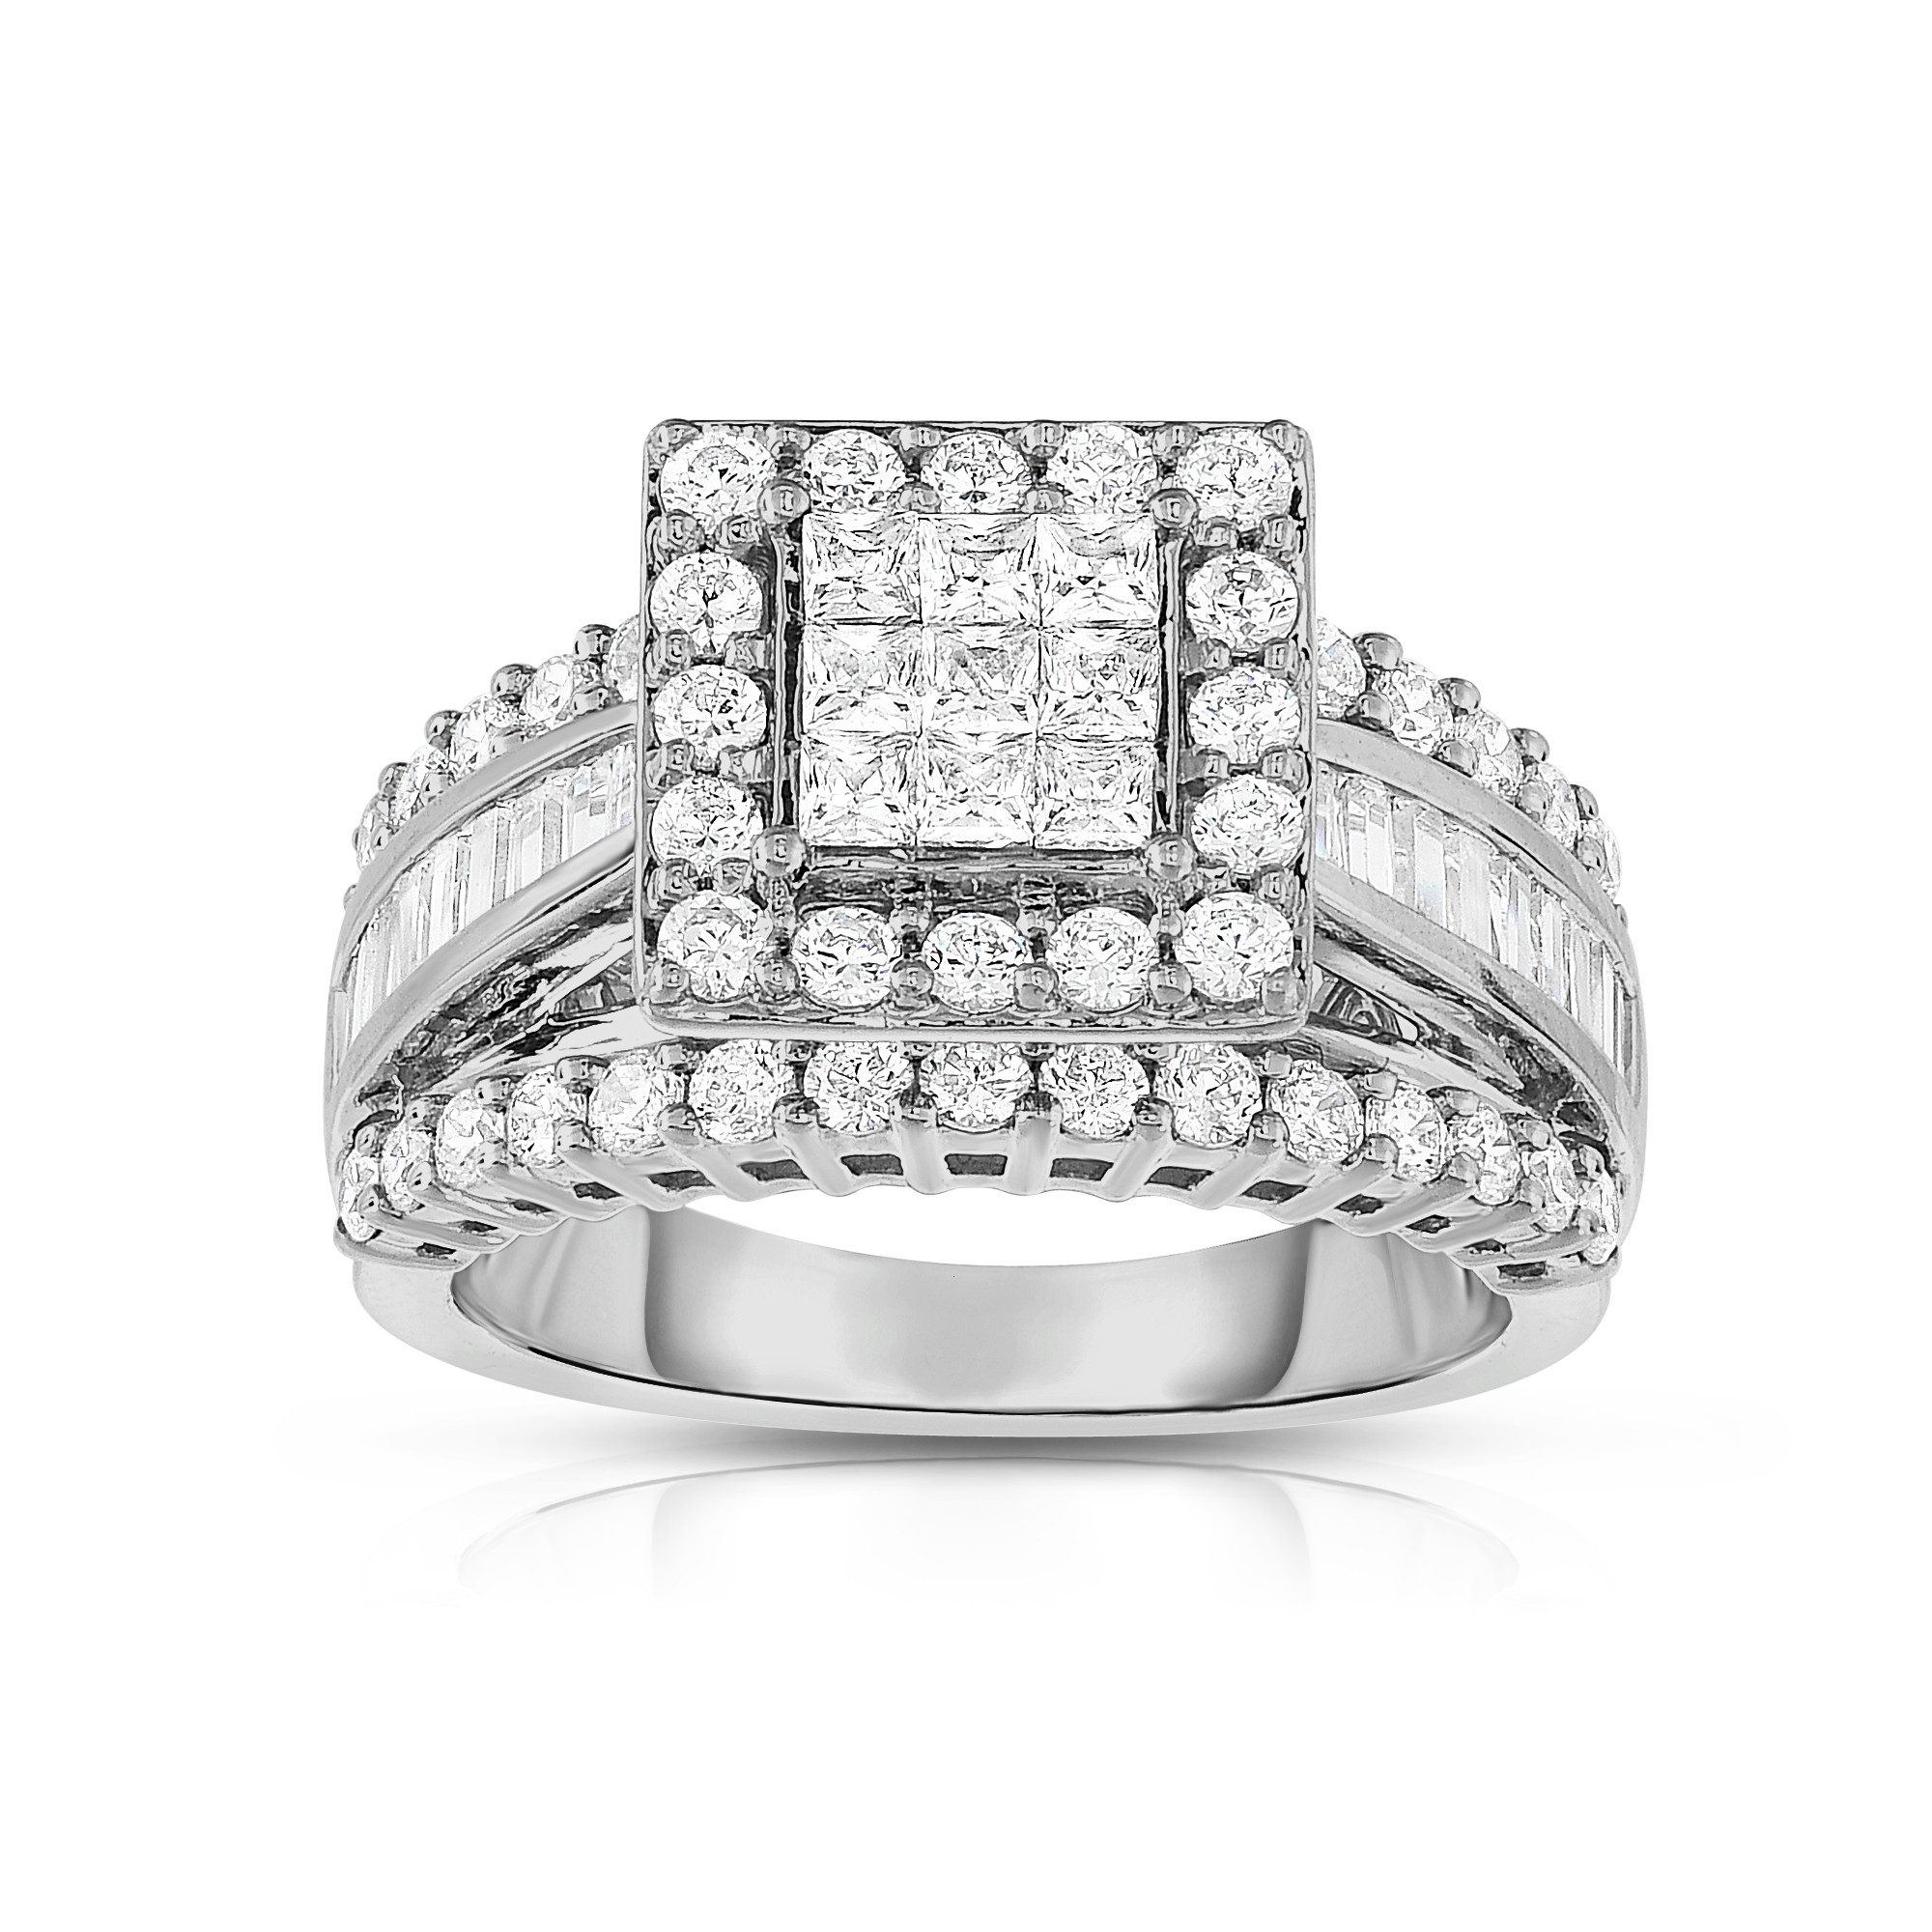 Square Cut Diamond Engagement Rings
 2 cttw Square Cut 14K White Gold Diamond Engagement Ring